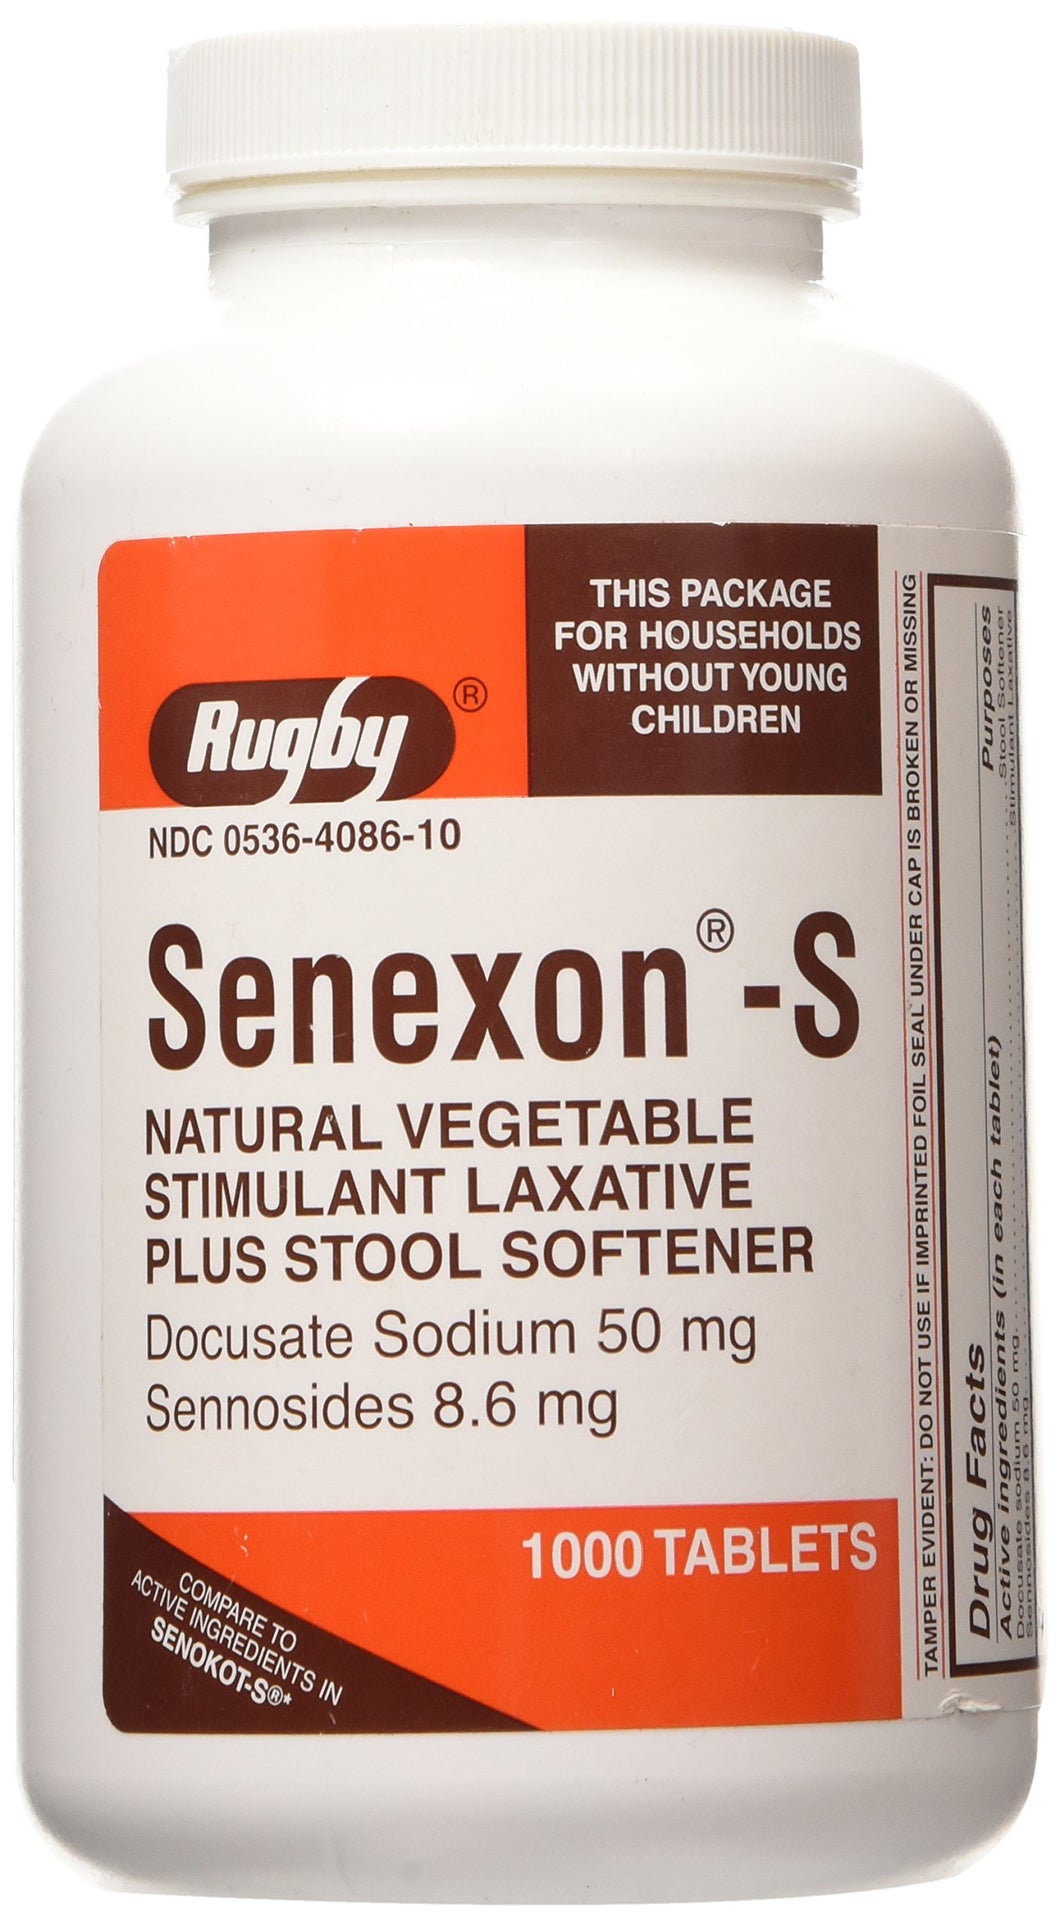 Rugby Senexon-S Generic for Senokot-S Vegetable Laxative Tablets Bottle of 1000 (Docusate sodium 50 mg, Sennosides 8.6 mg)